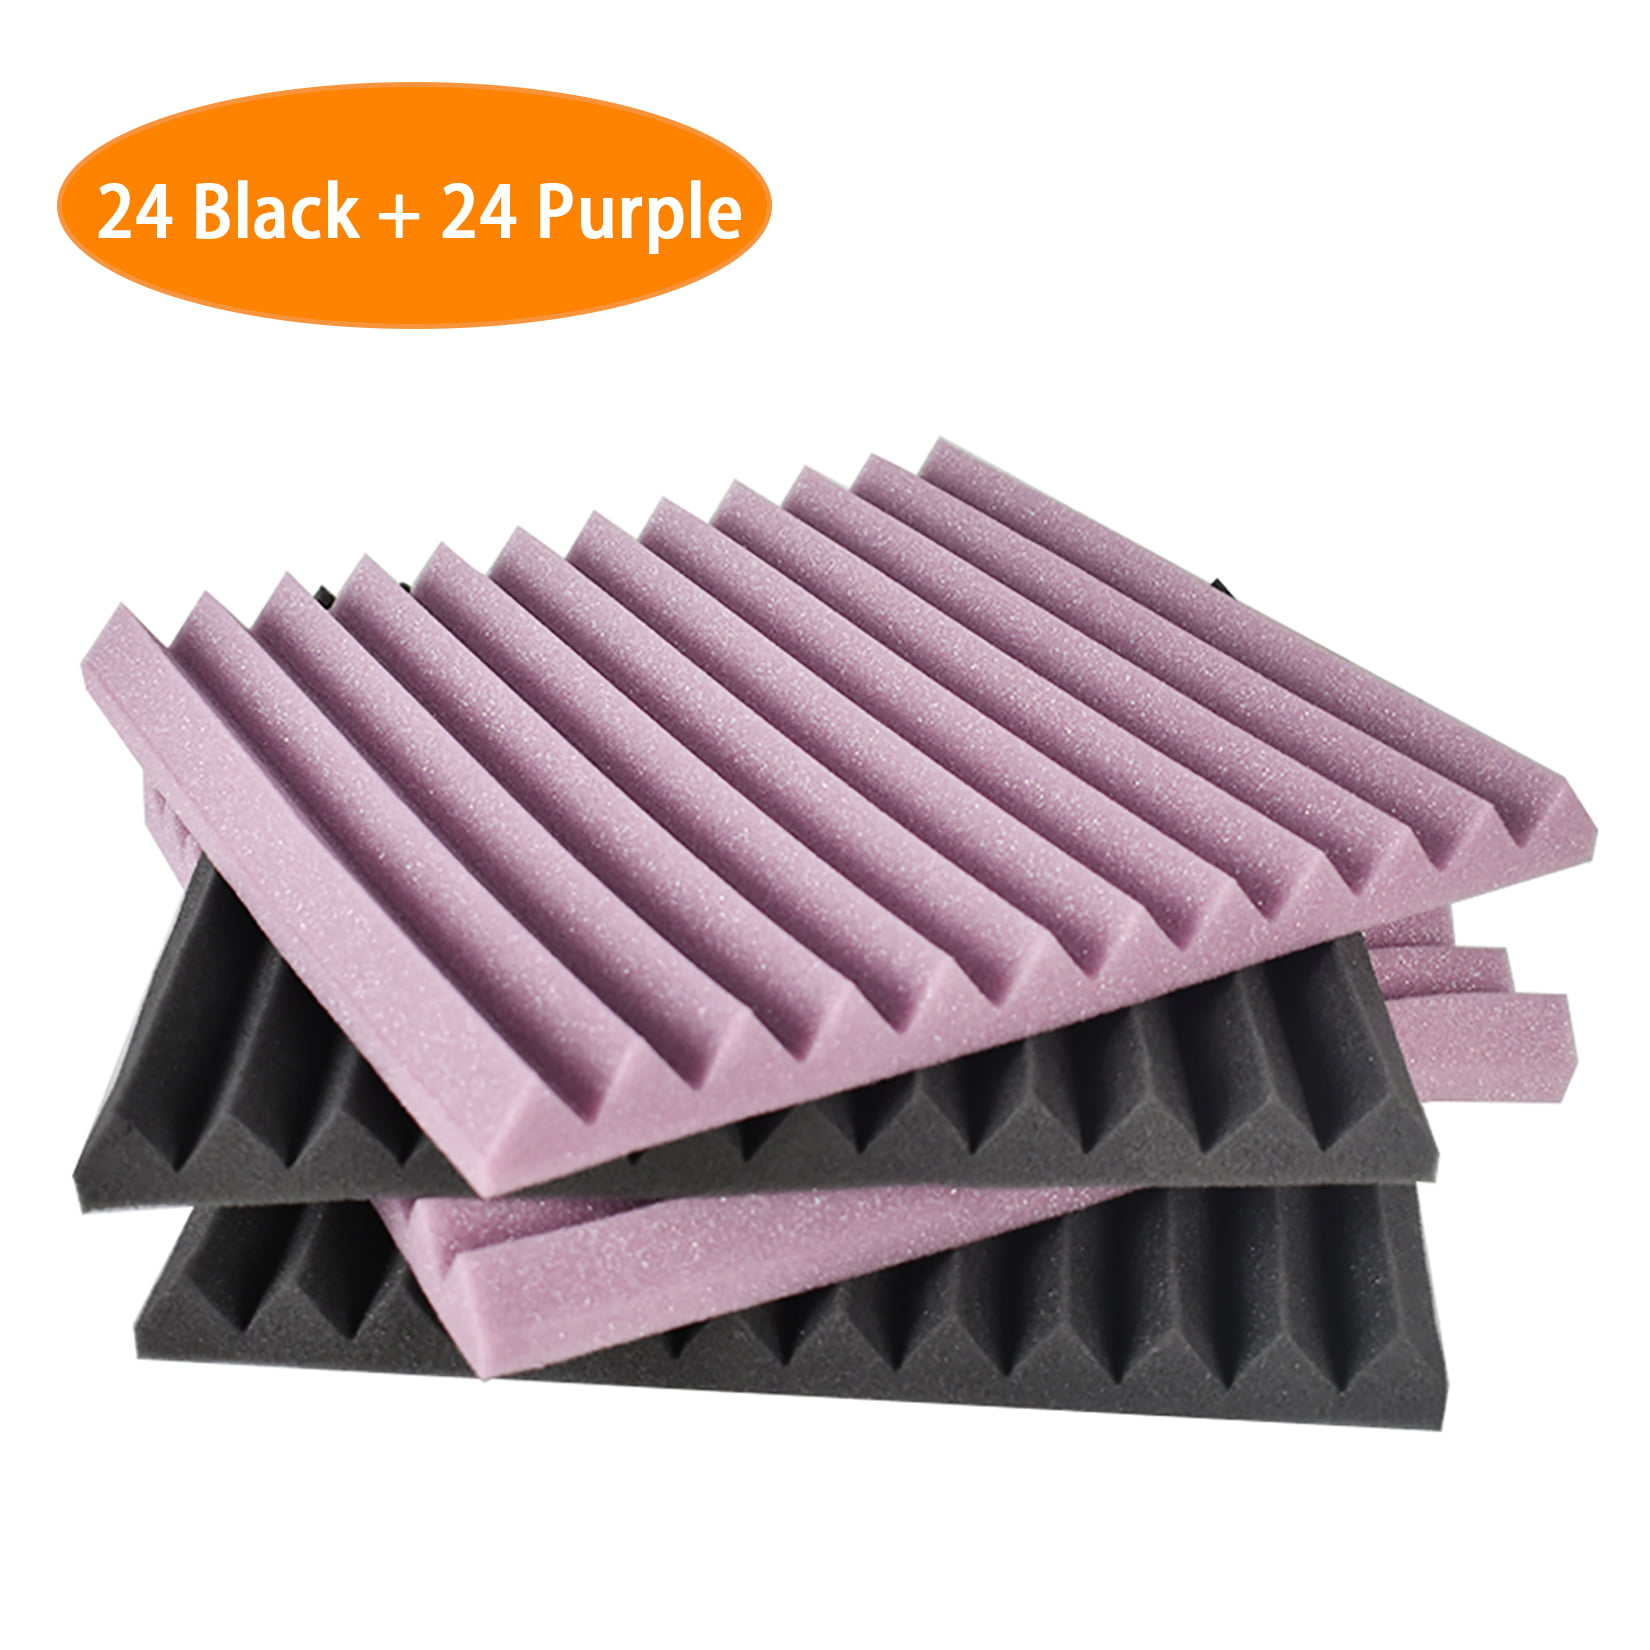 48 Pack 12X 12X1 Acoustic Panels Studio Soundproofing Foam Wedge Tiles, 24Black+24purple 